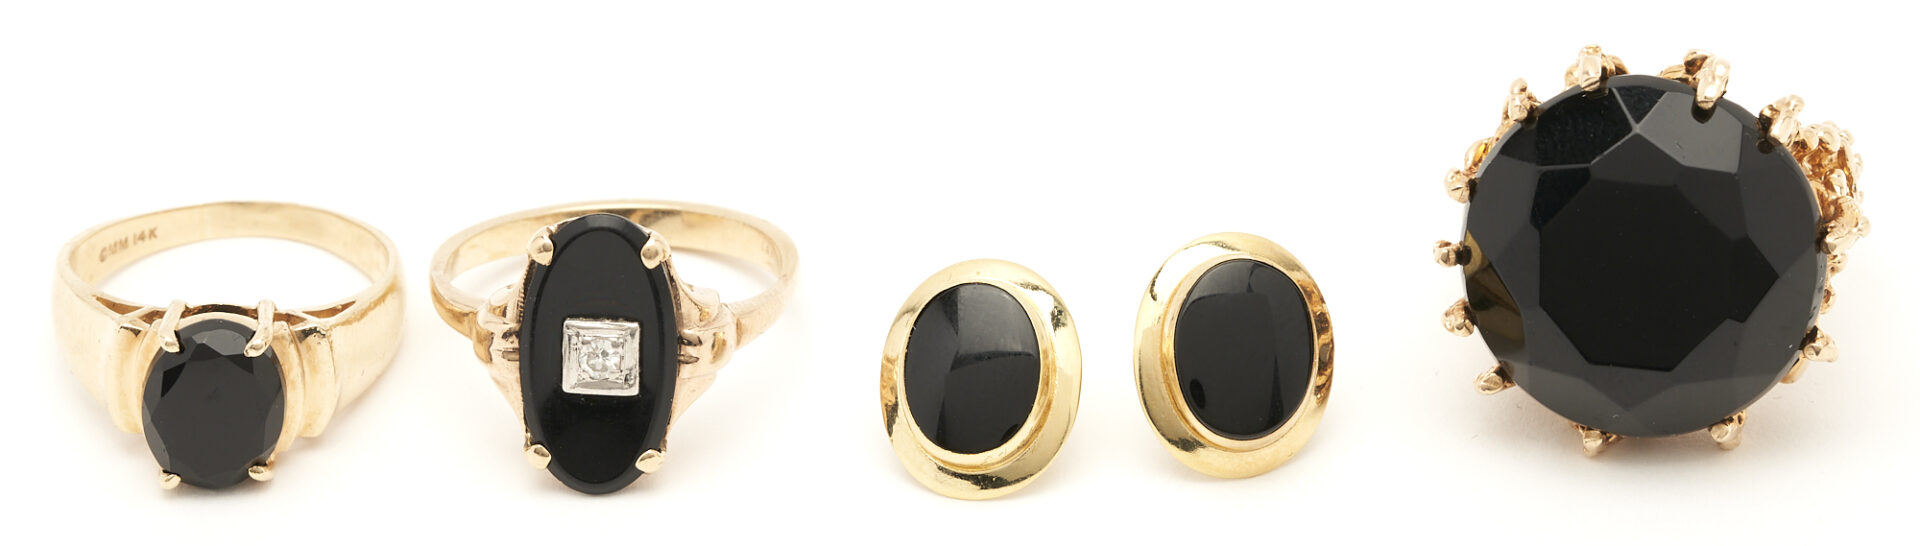 Lot 895: 3 14K Gold & Black Onyx Rings plus Pr. Earrings, 4 items